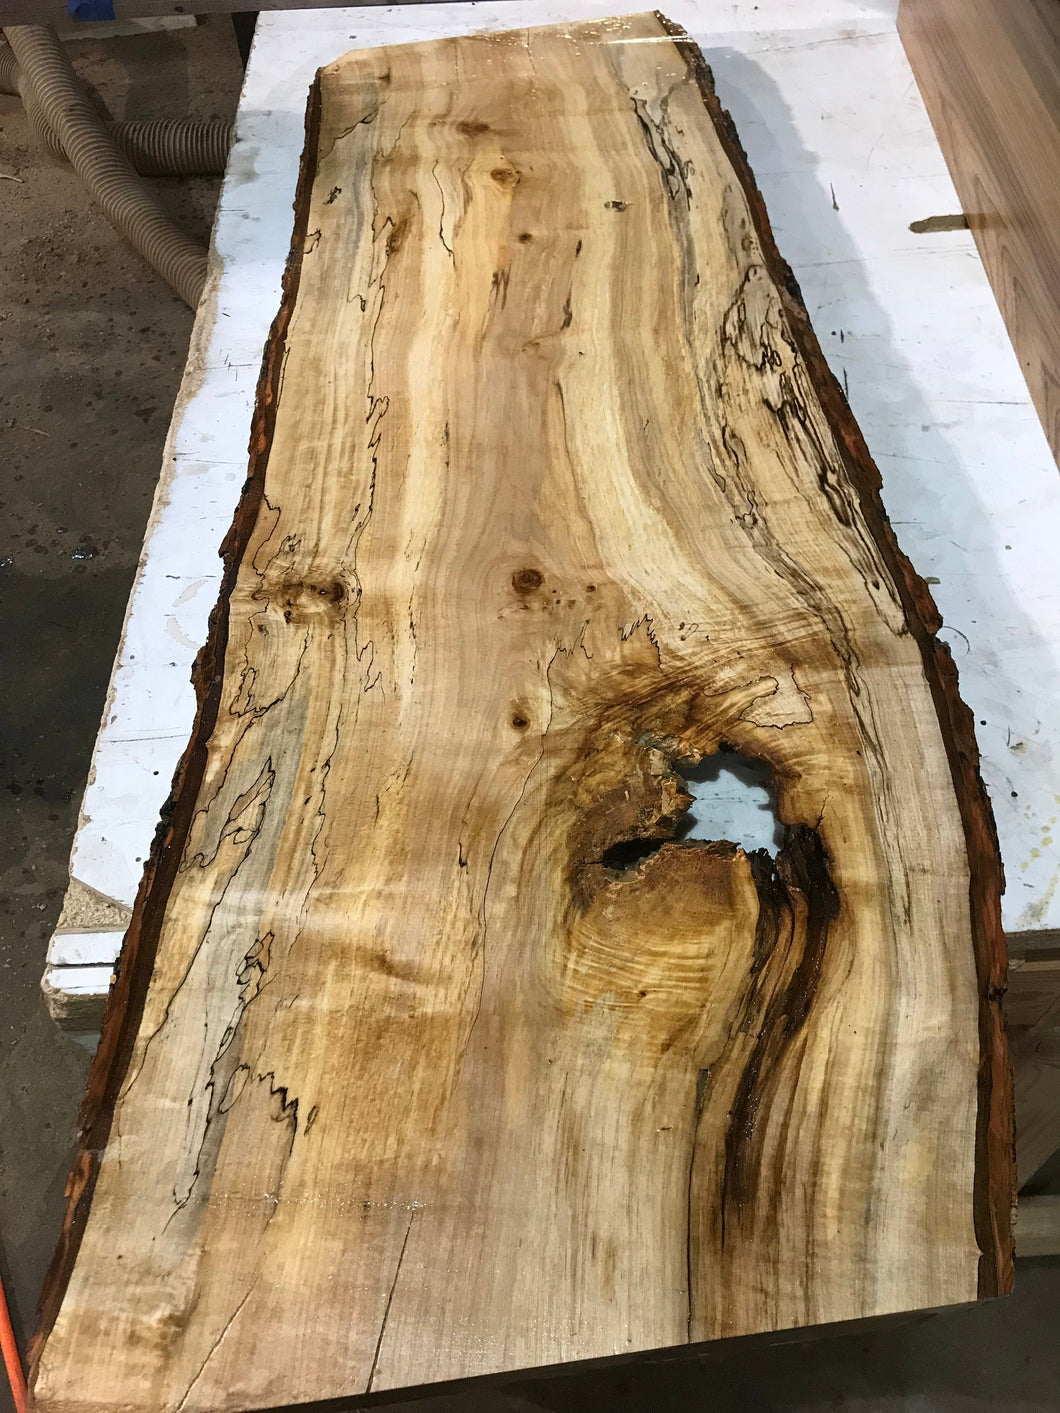 Wood Slab (one of a kind)